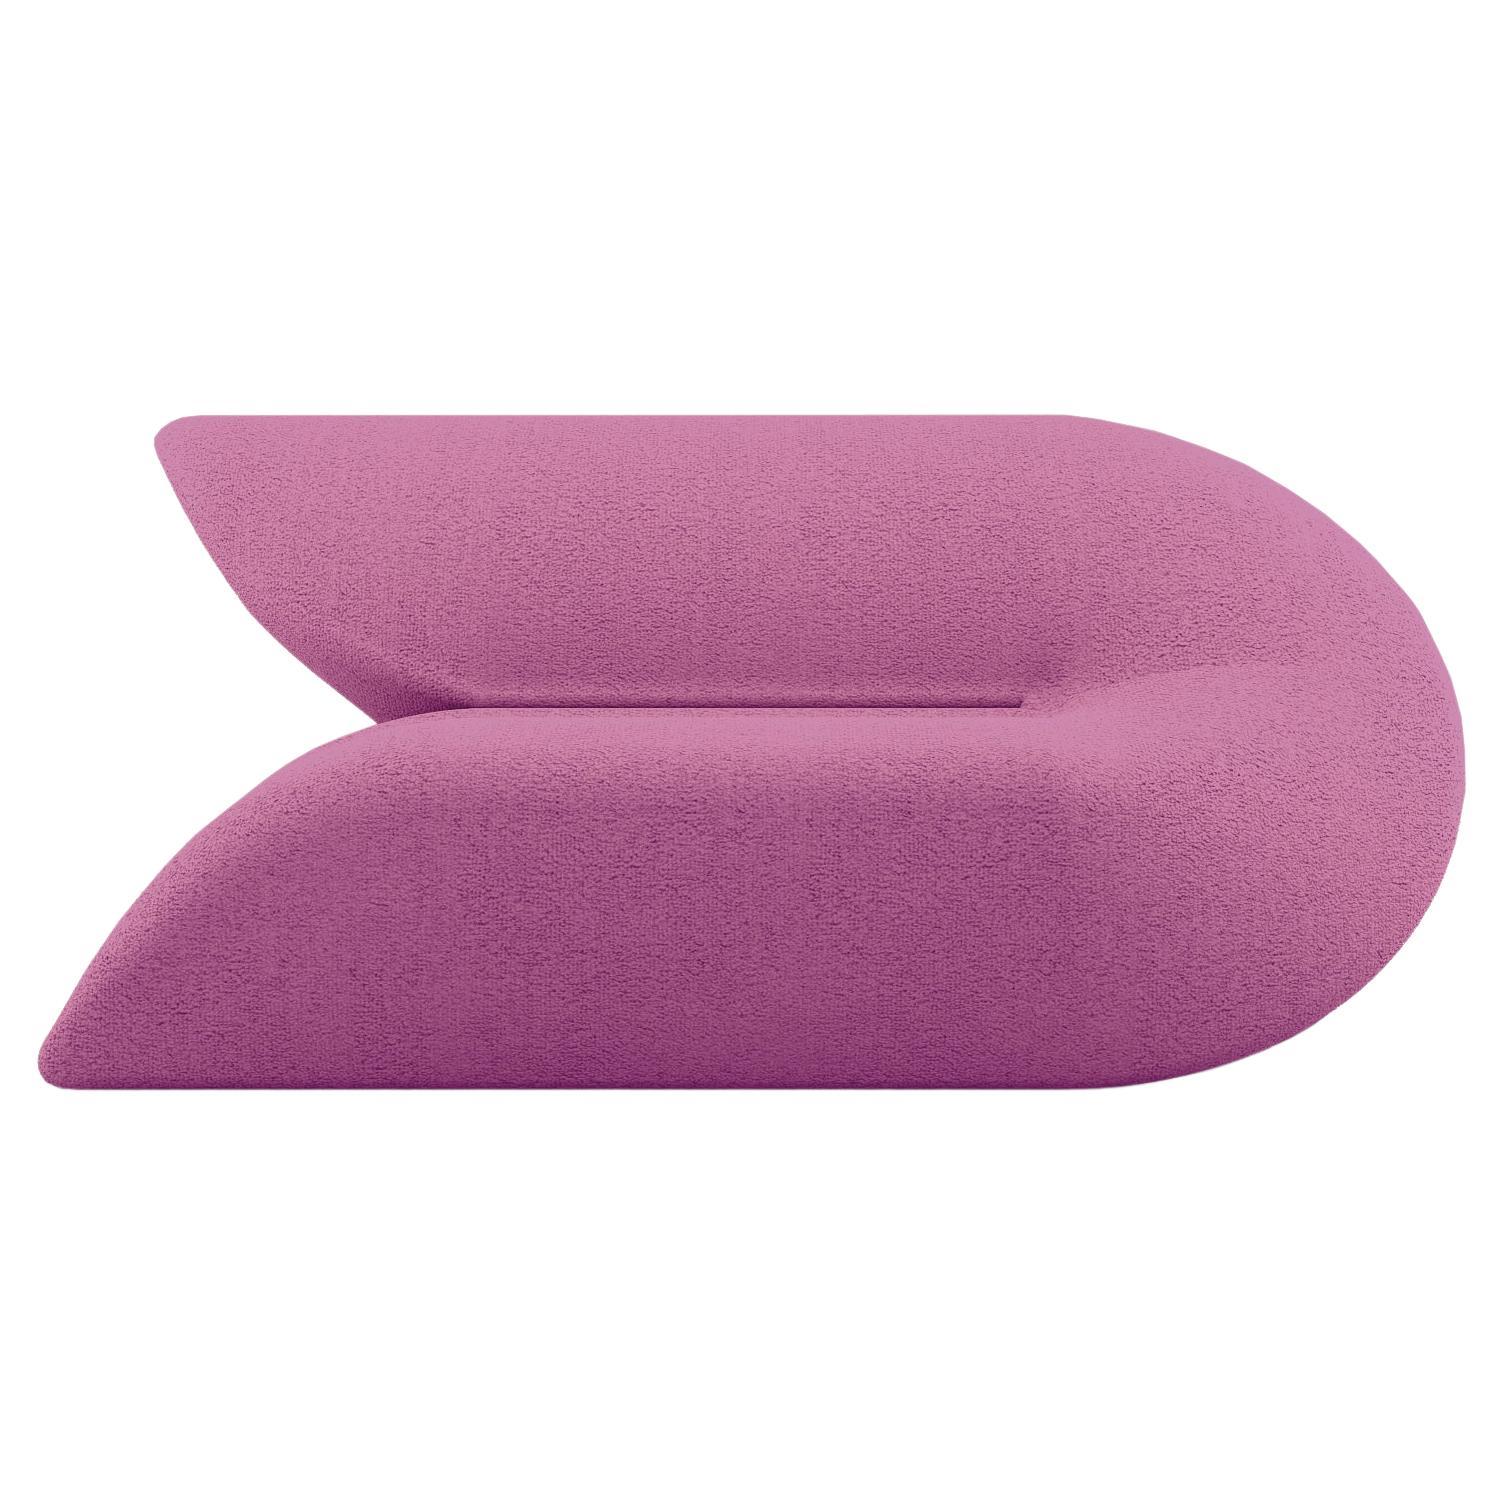 Delta Sofa - Modern Violet Upholstered Two Seat Sofa